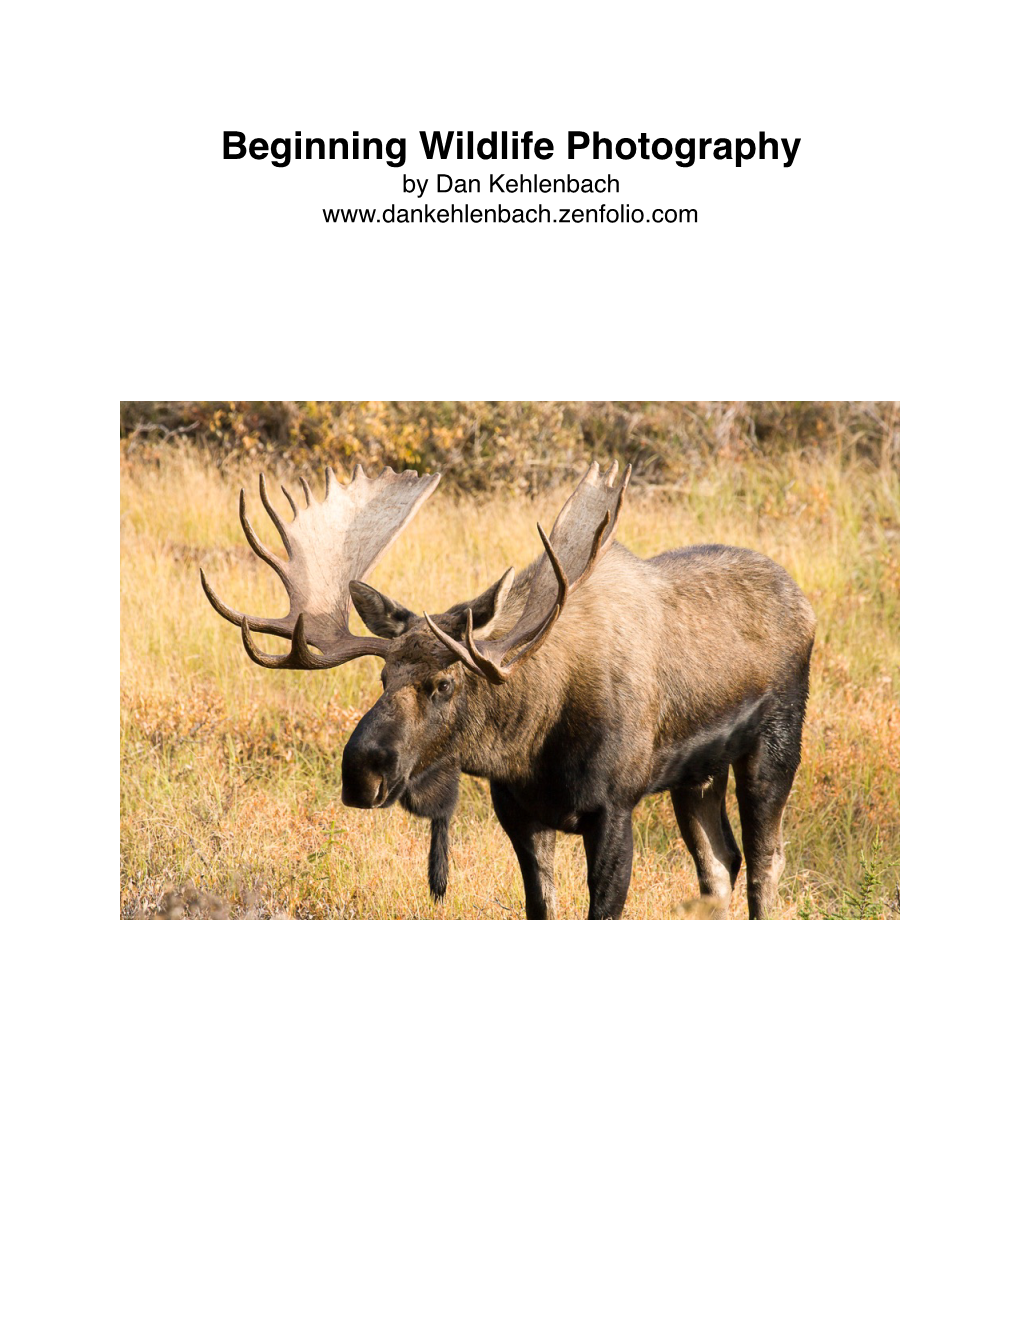 Beginning Wildlife Photography by Dan Kehlenbach Wildlife Photography